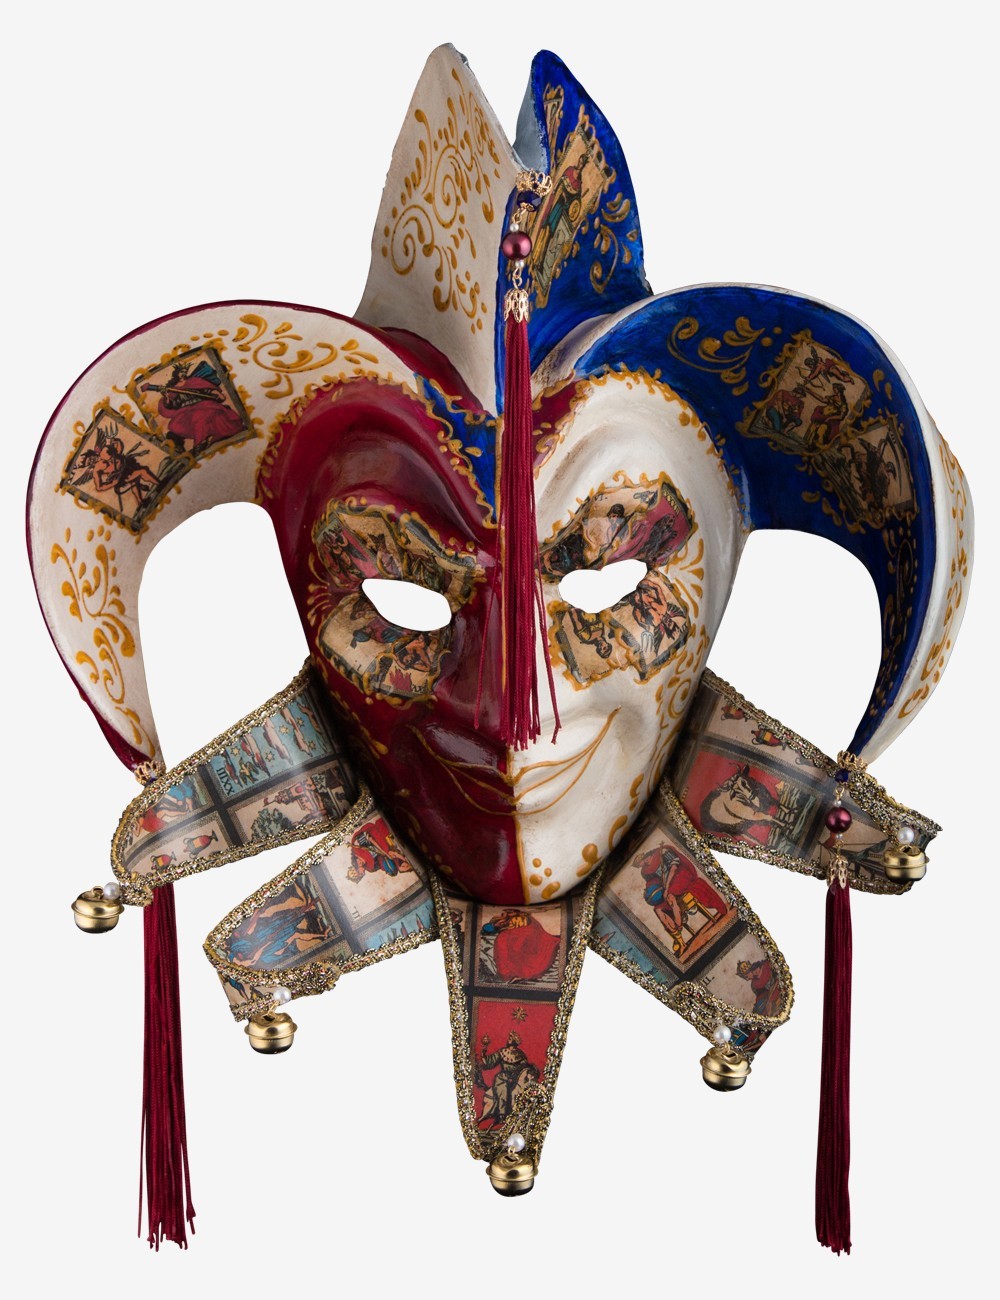 Venetian Joker Mask - The Fool